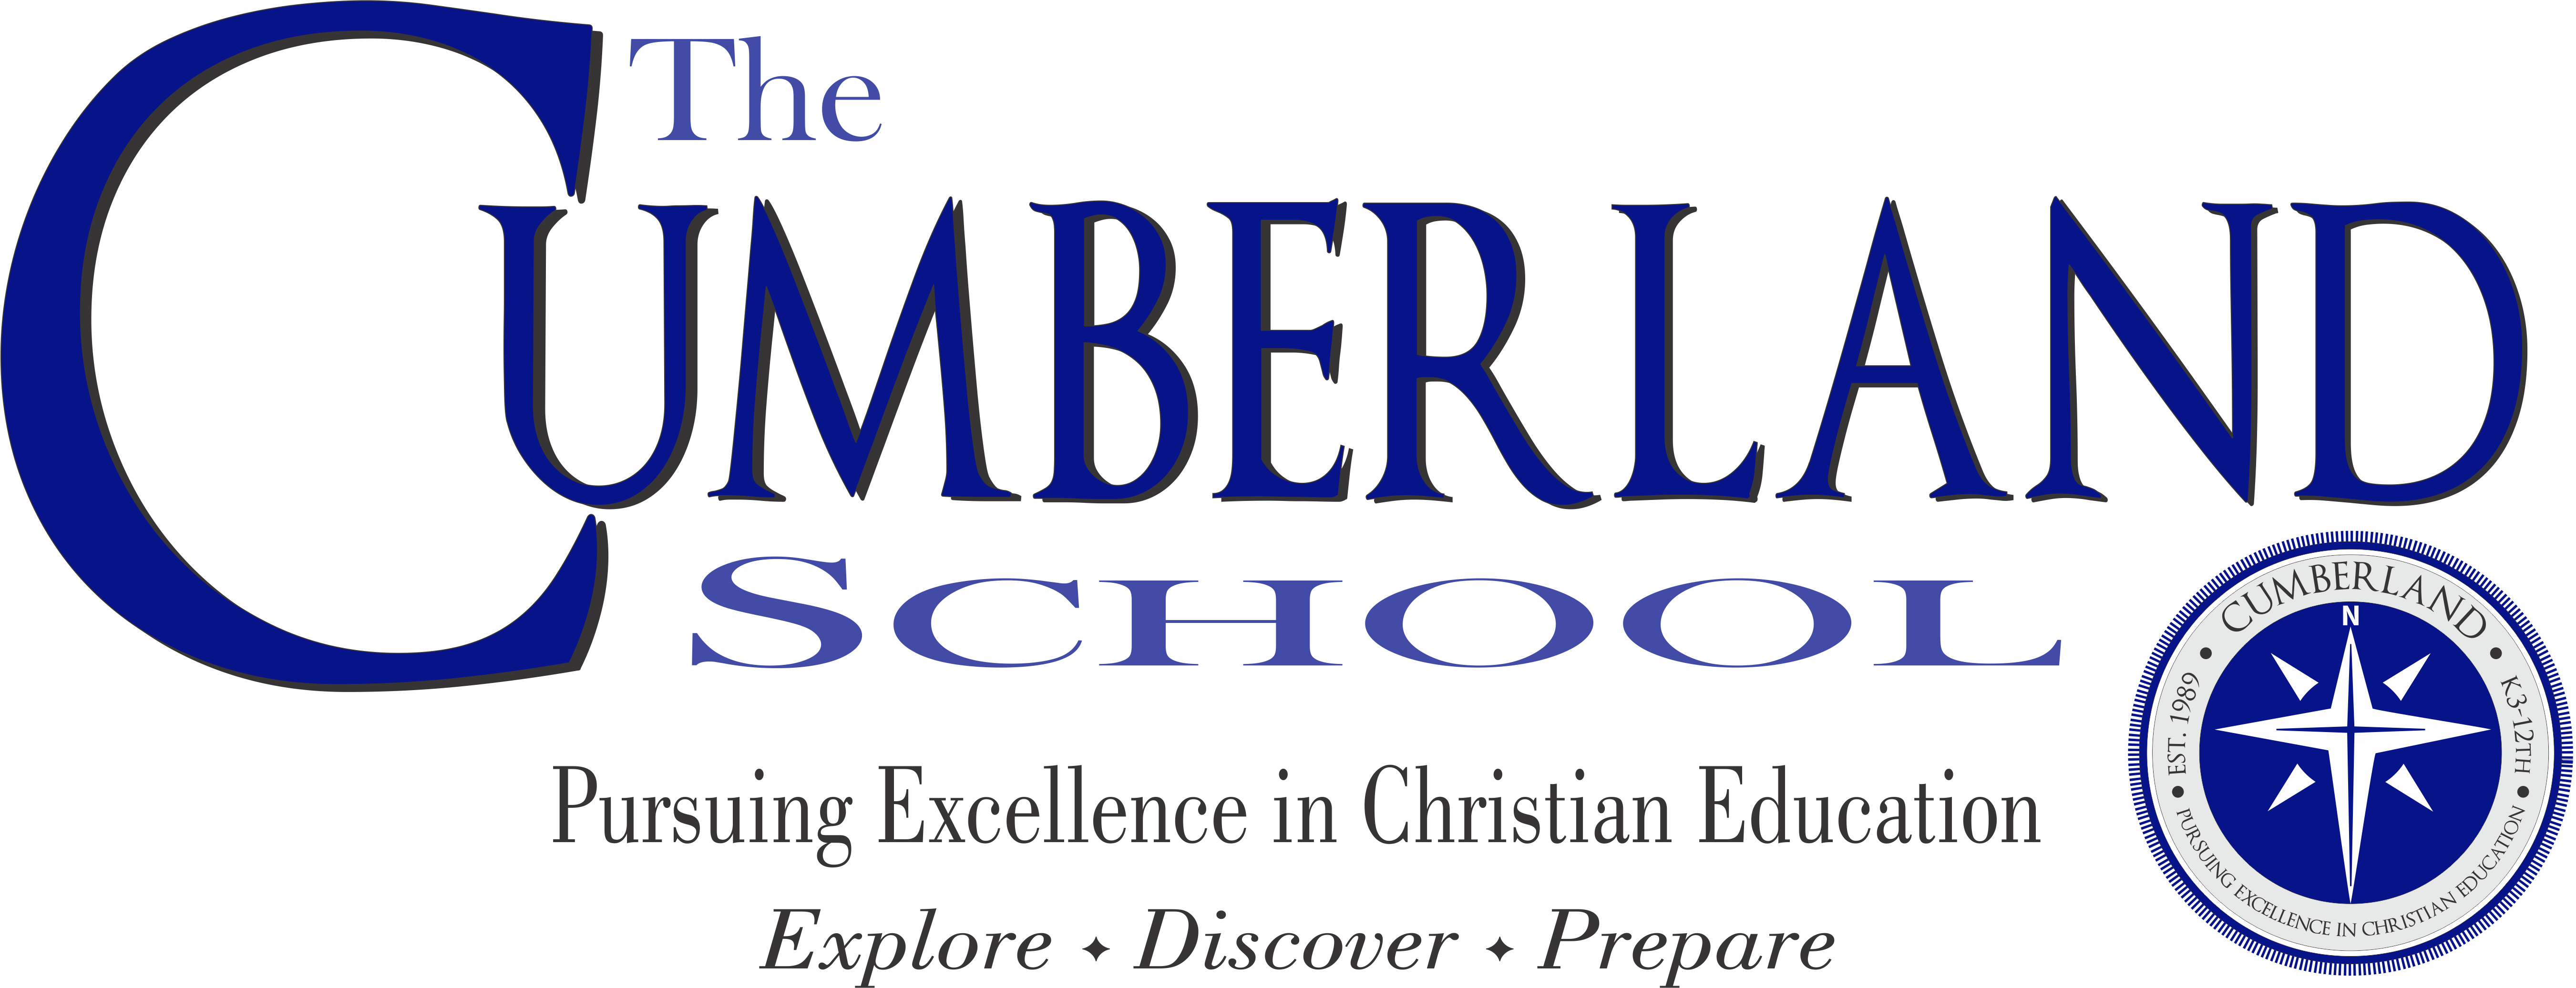 The Cumberland School - 2nd Grade 2018 - 2019 School Year